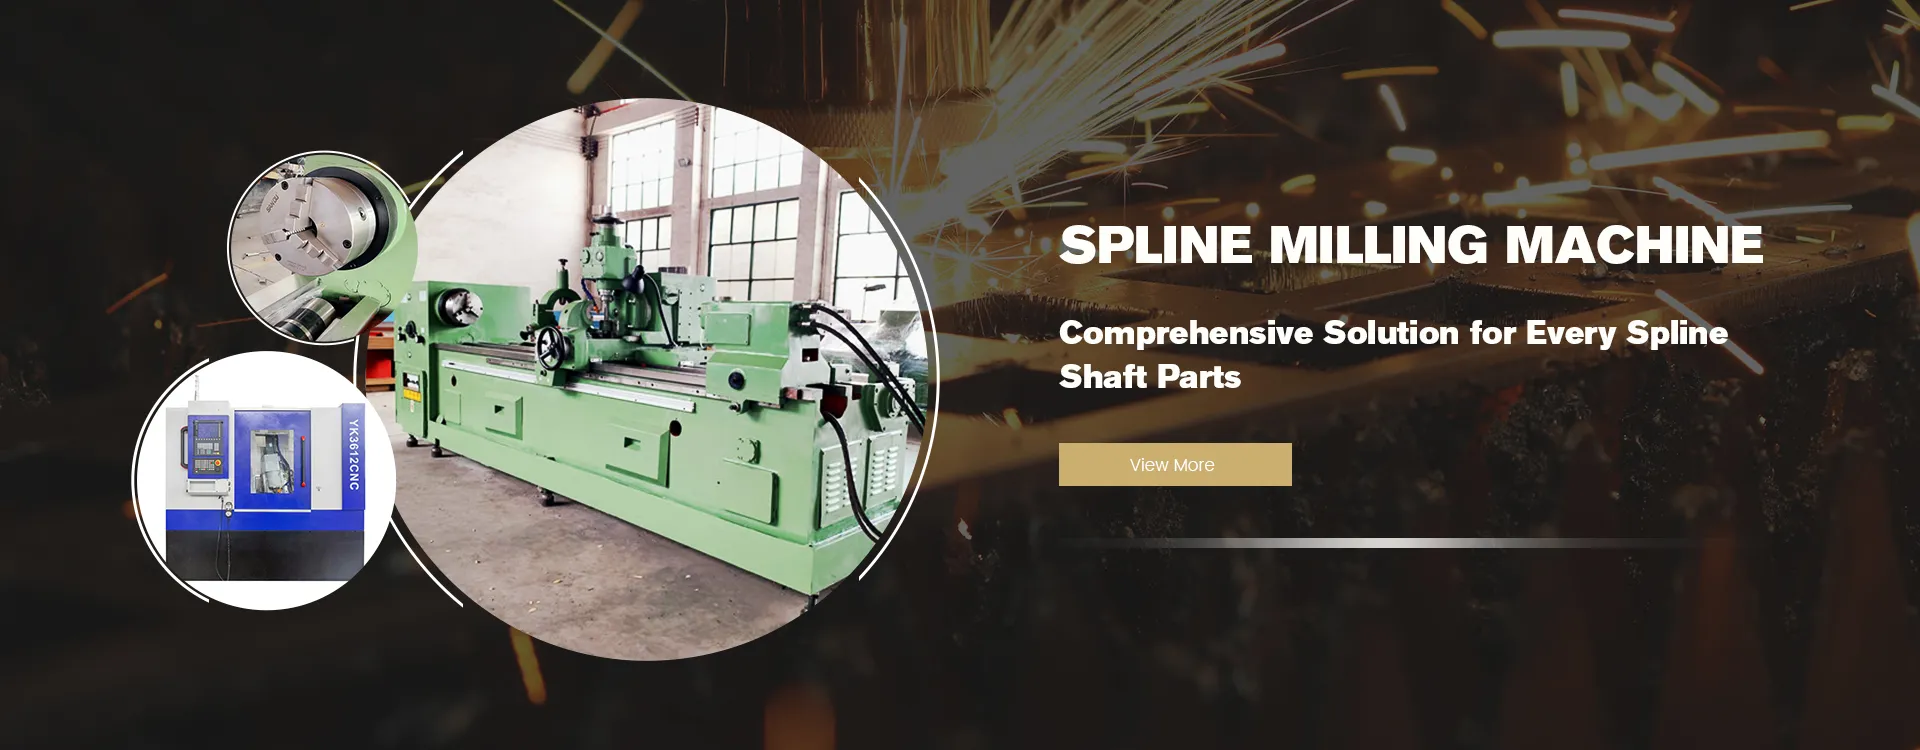 Spline Milling Machine